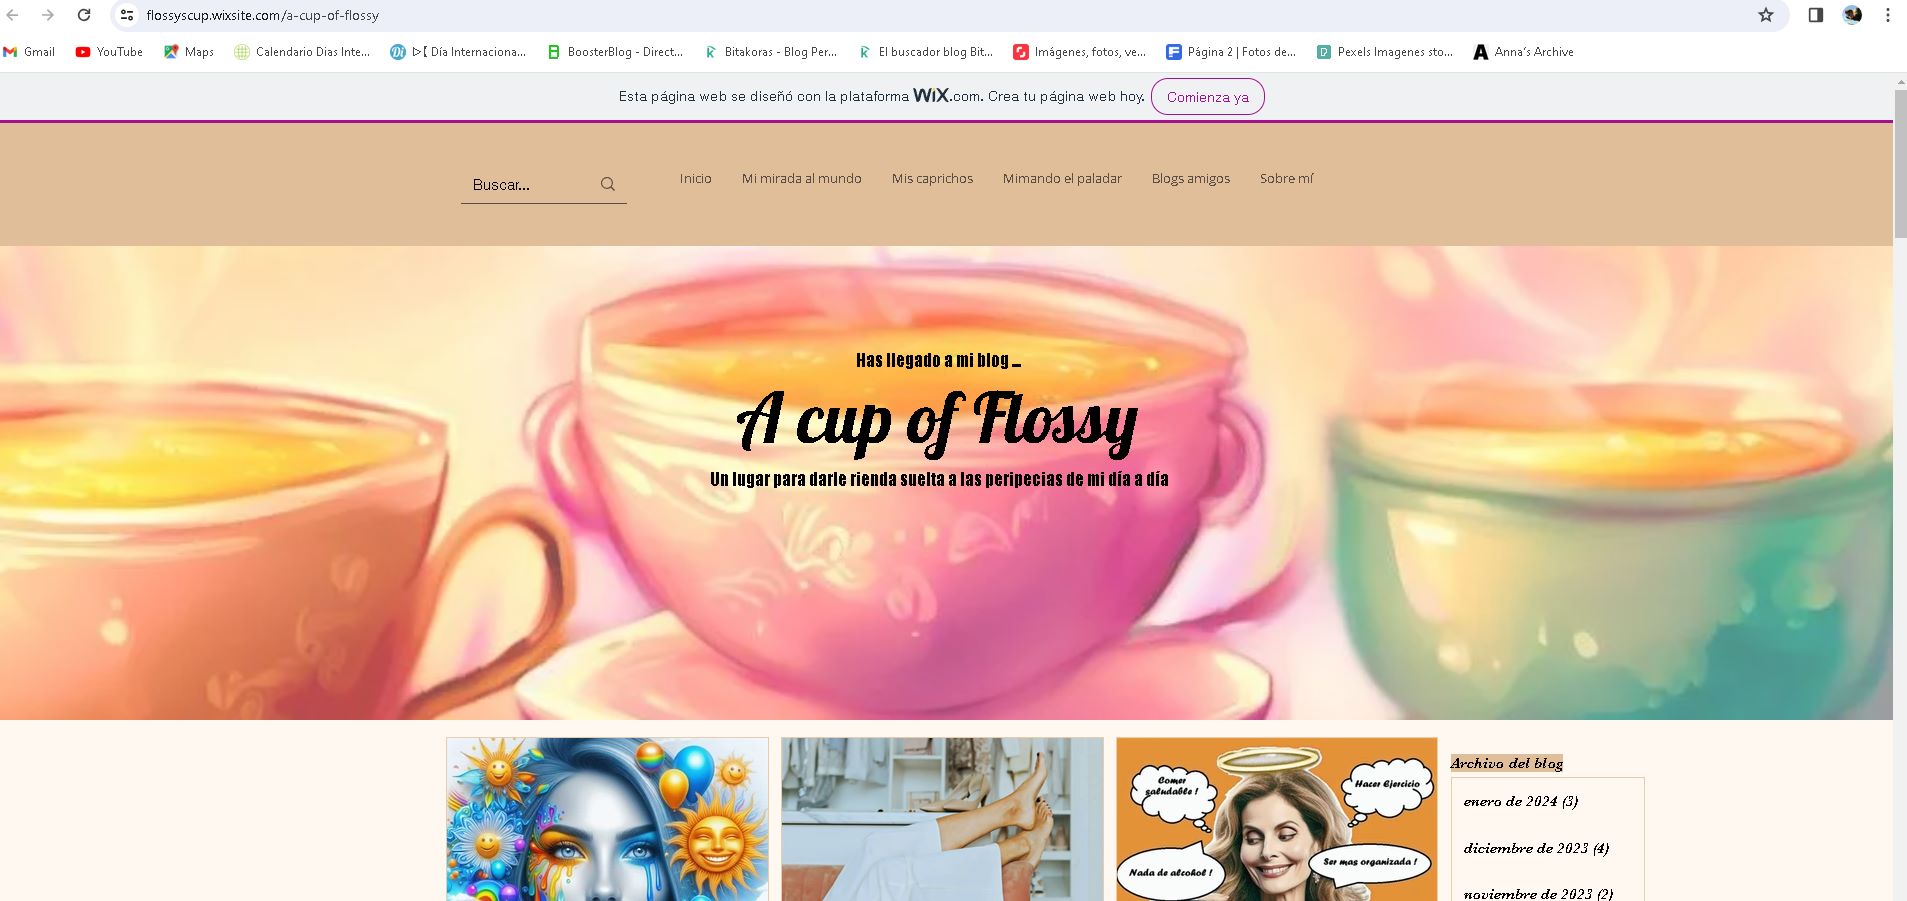 Buscador blog - A cup of Flossy en Bitakoras